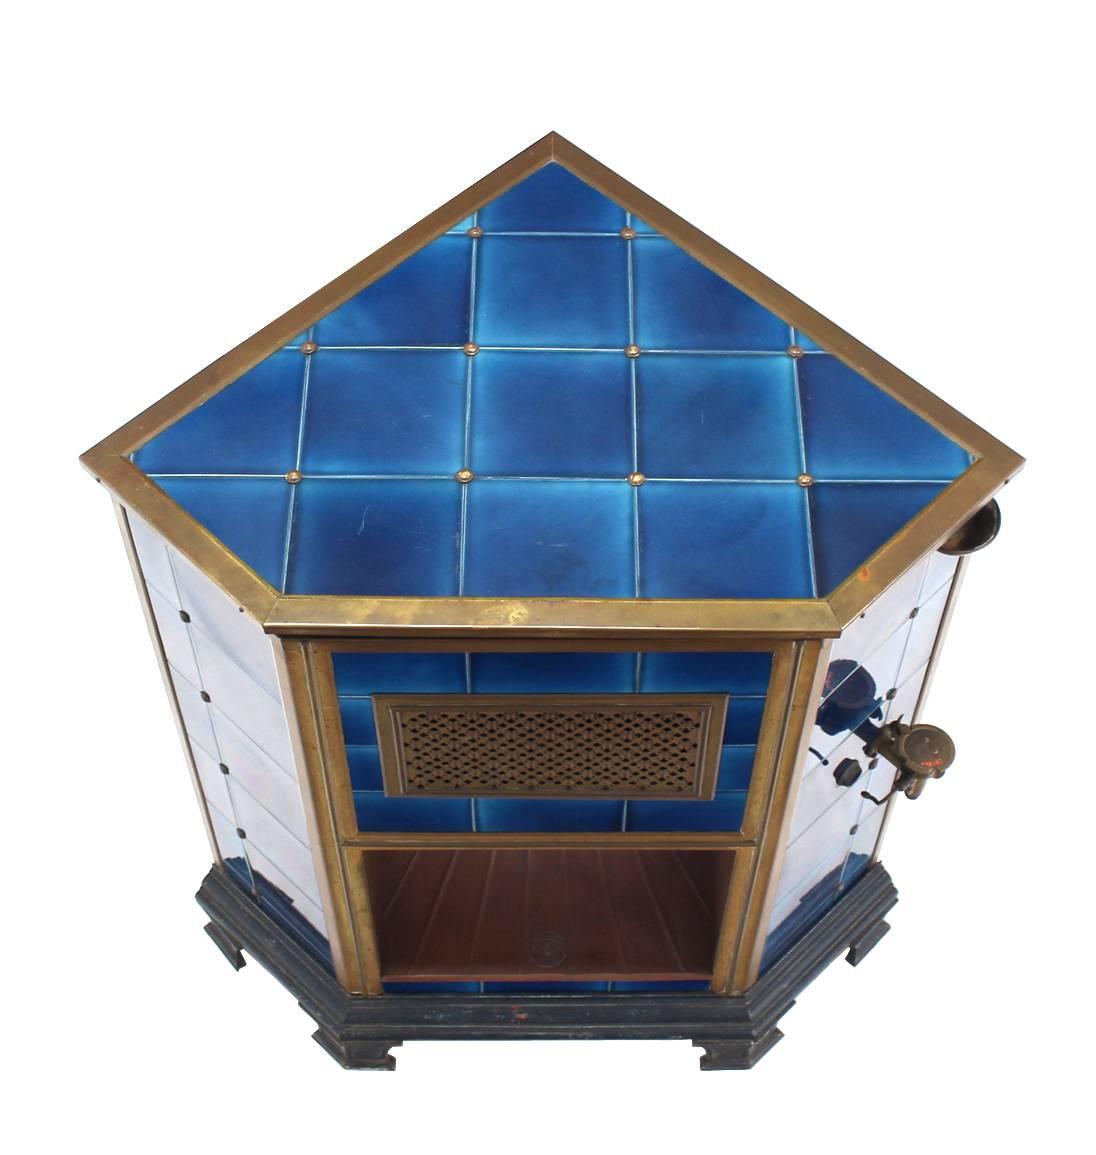 Cobalt blue tile brass trim Austrian corner gas fireplace or heater or hearth.